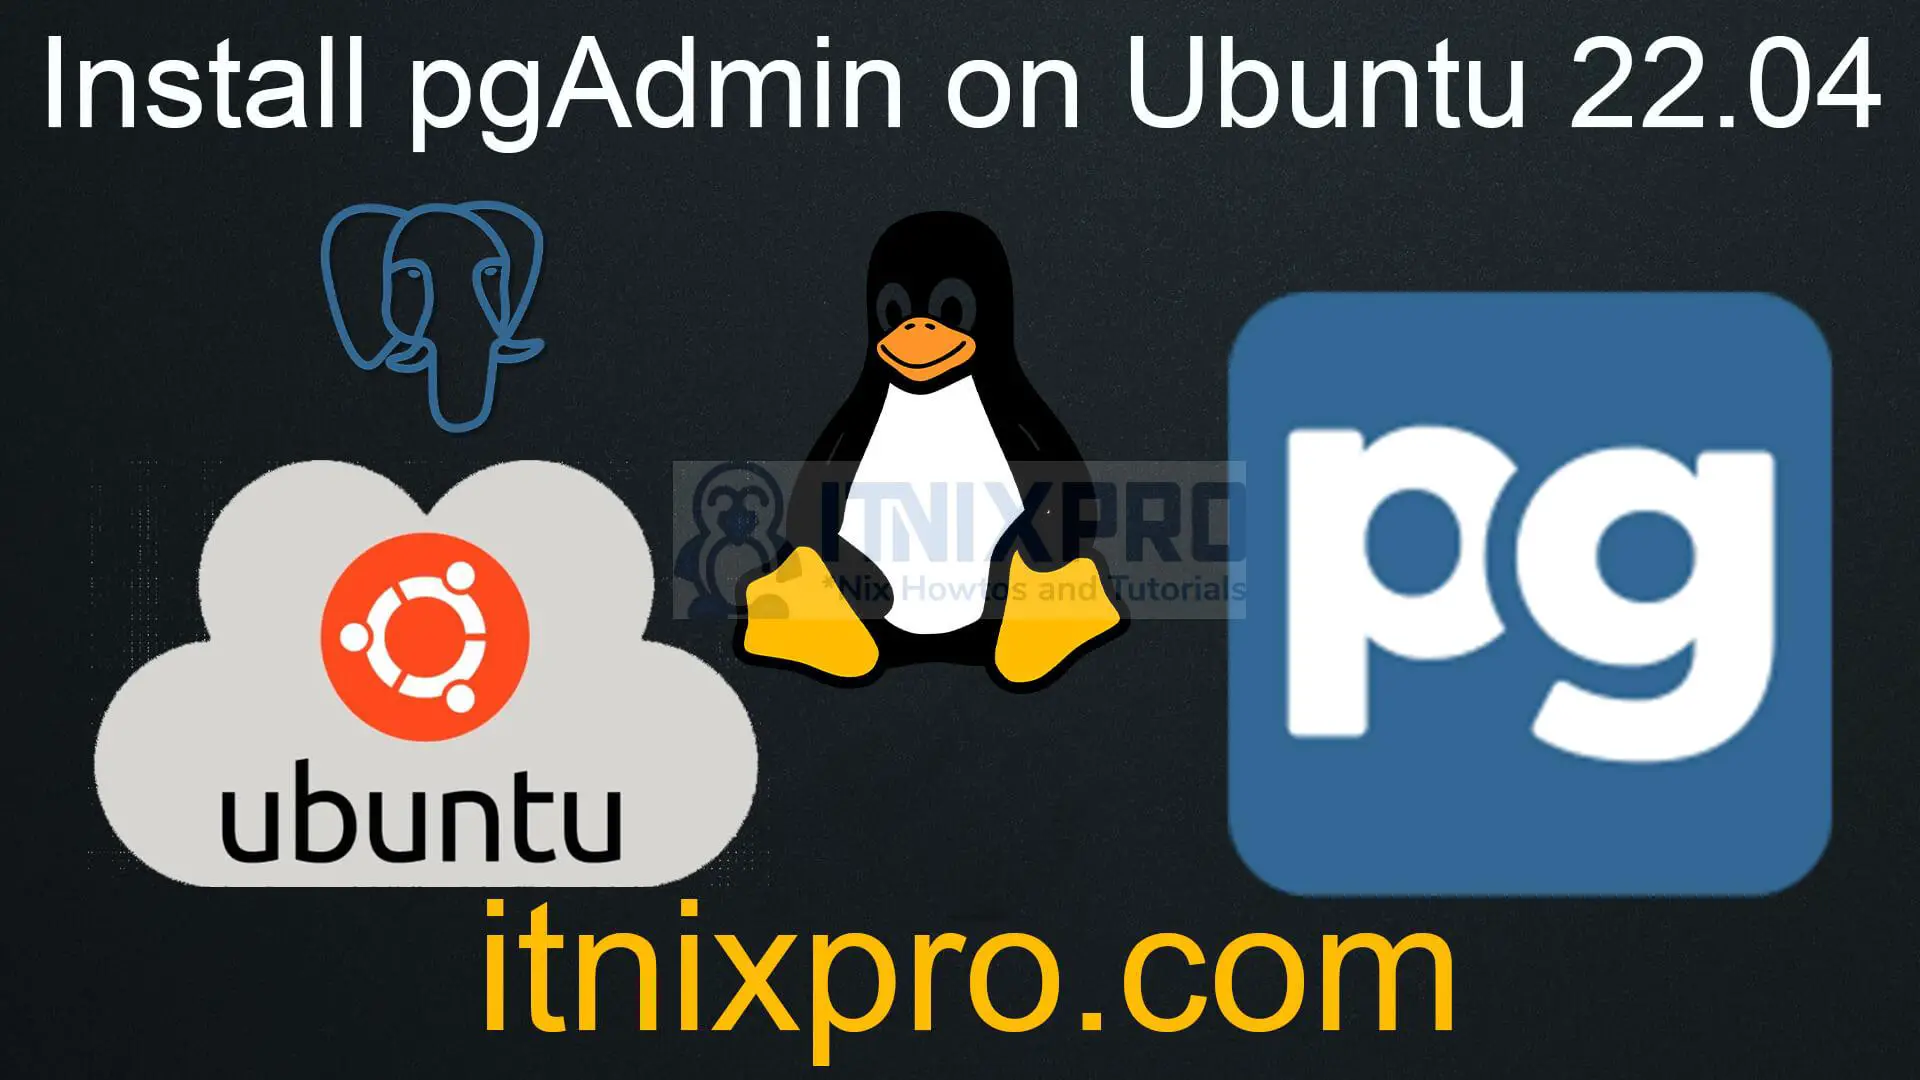 Install pgAdmin on Ubuntu 22.04